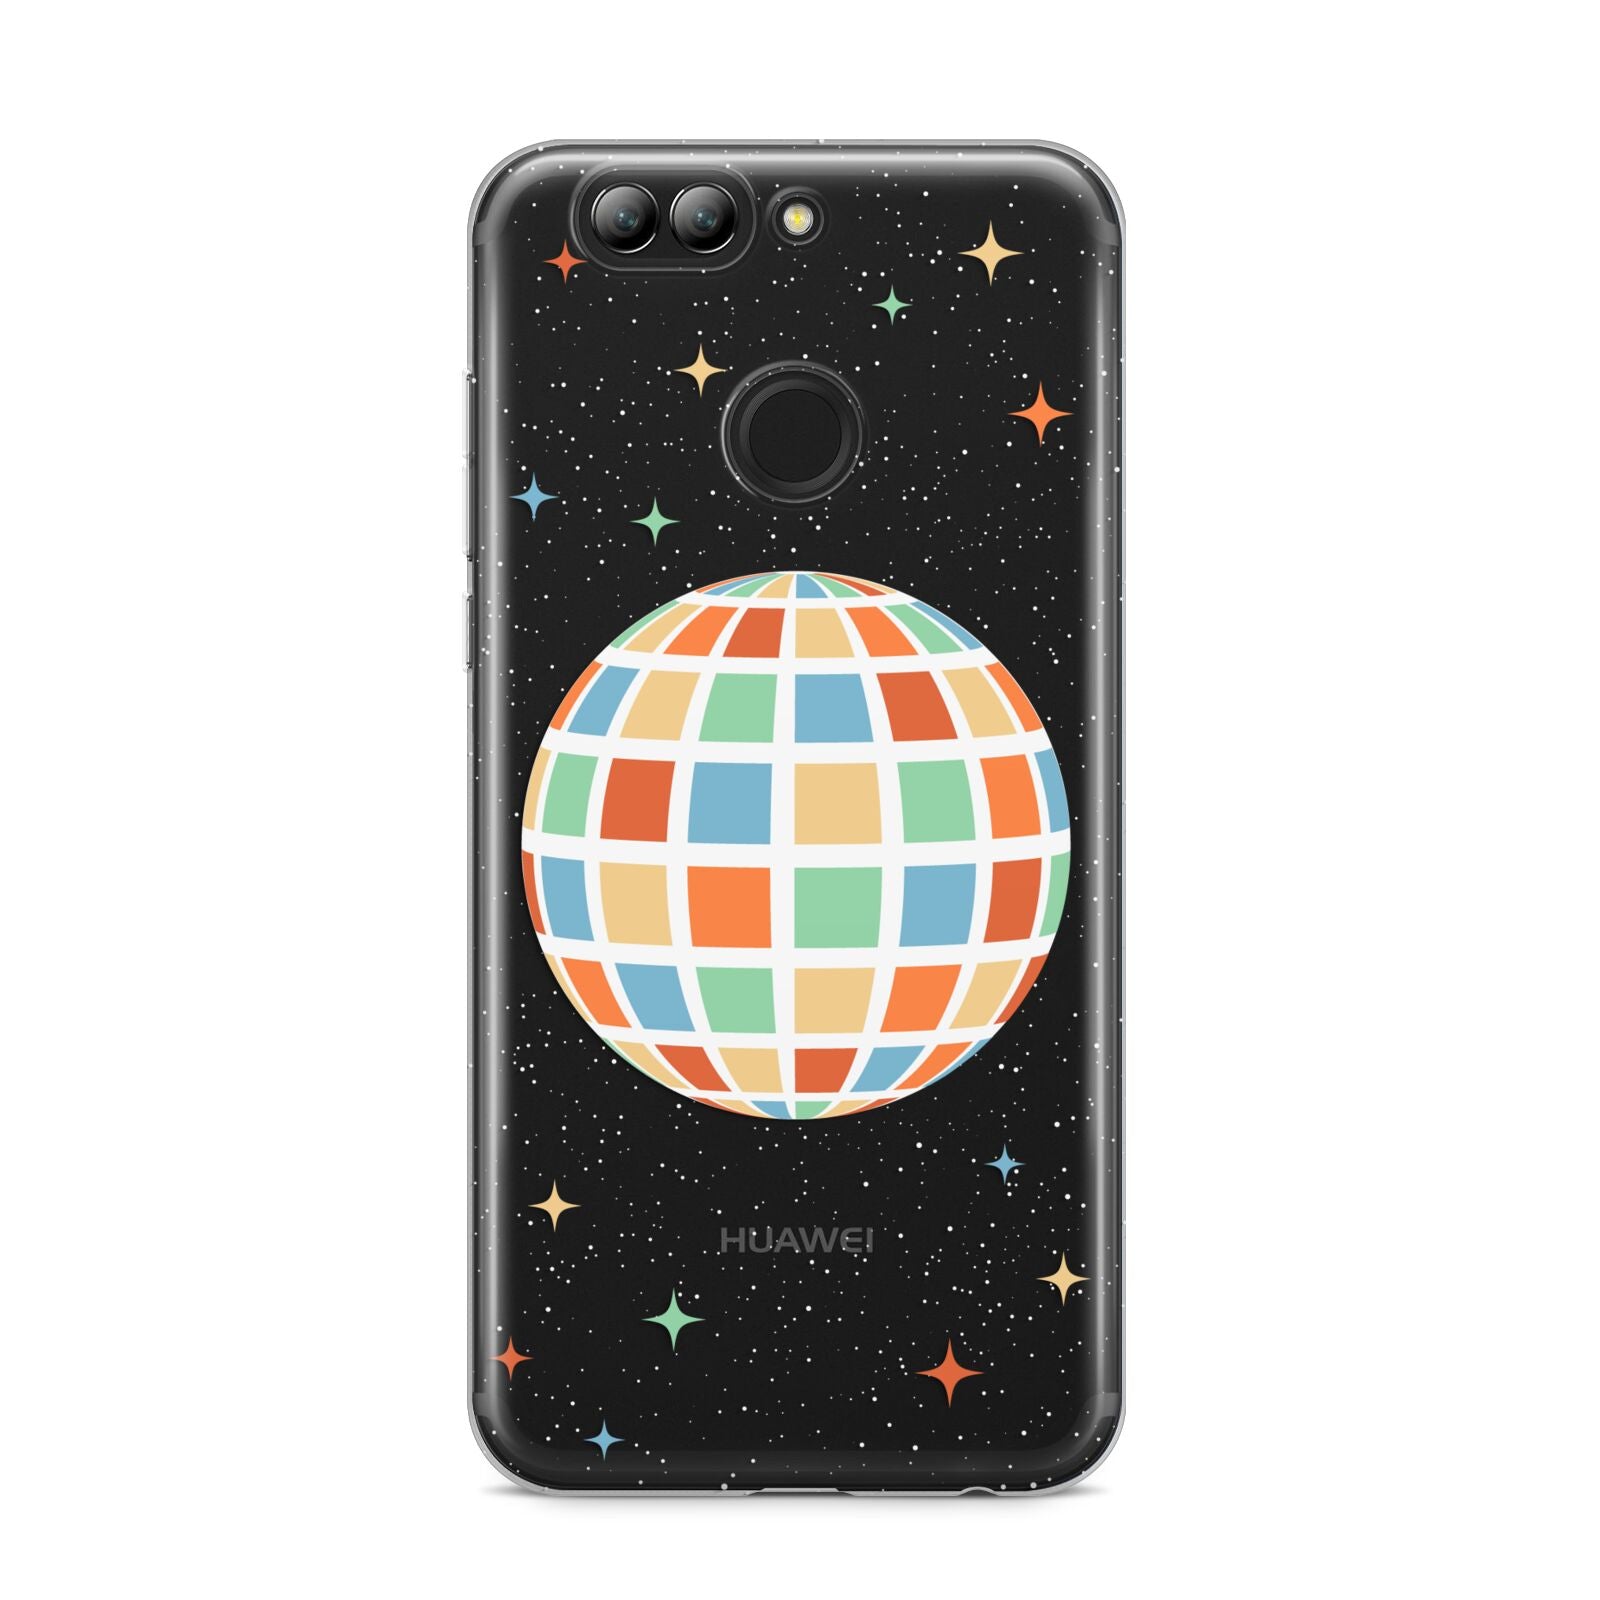 Disco Ball Huawei Nova 2s Phone Case